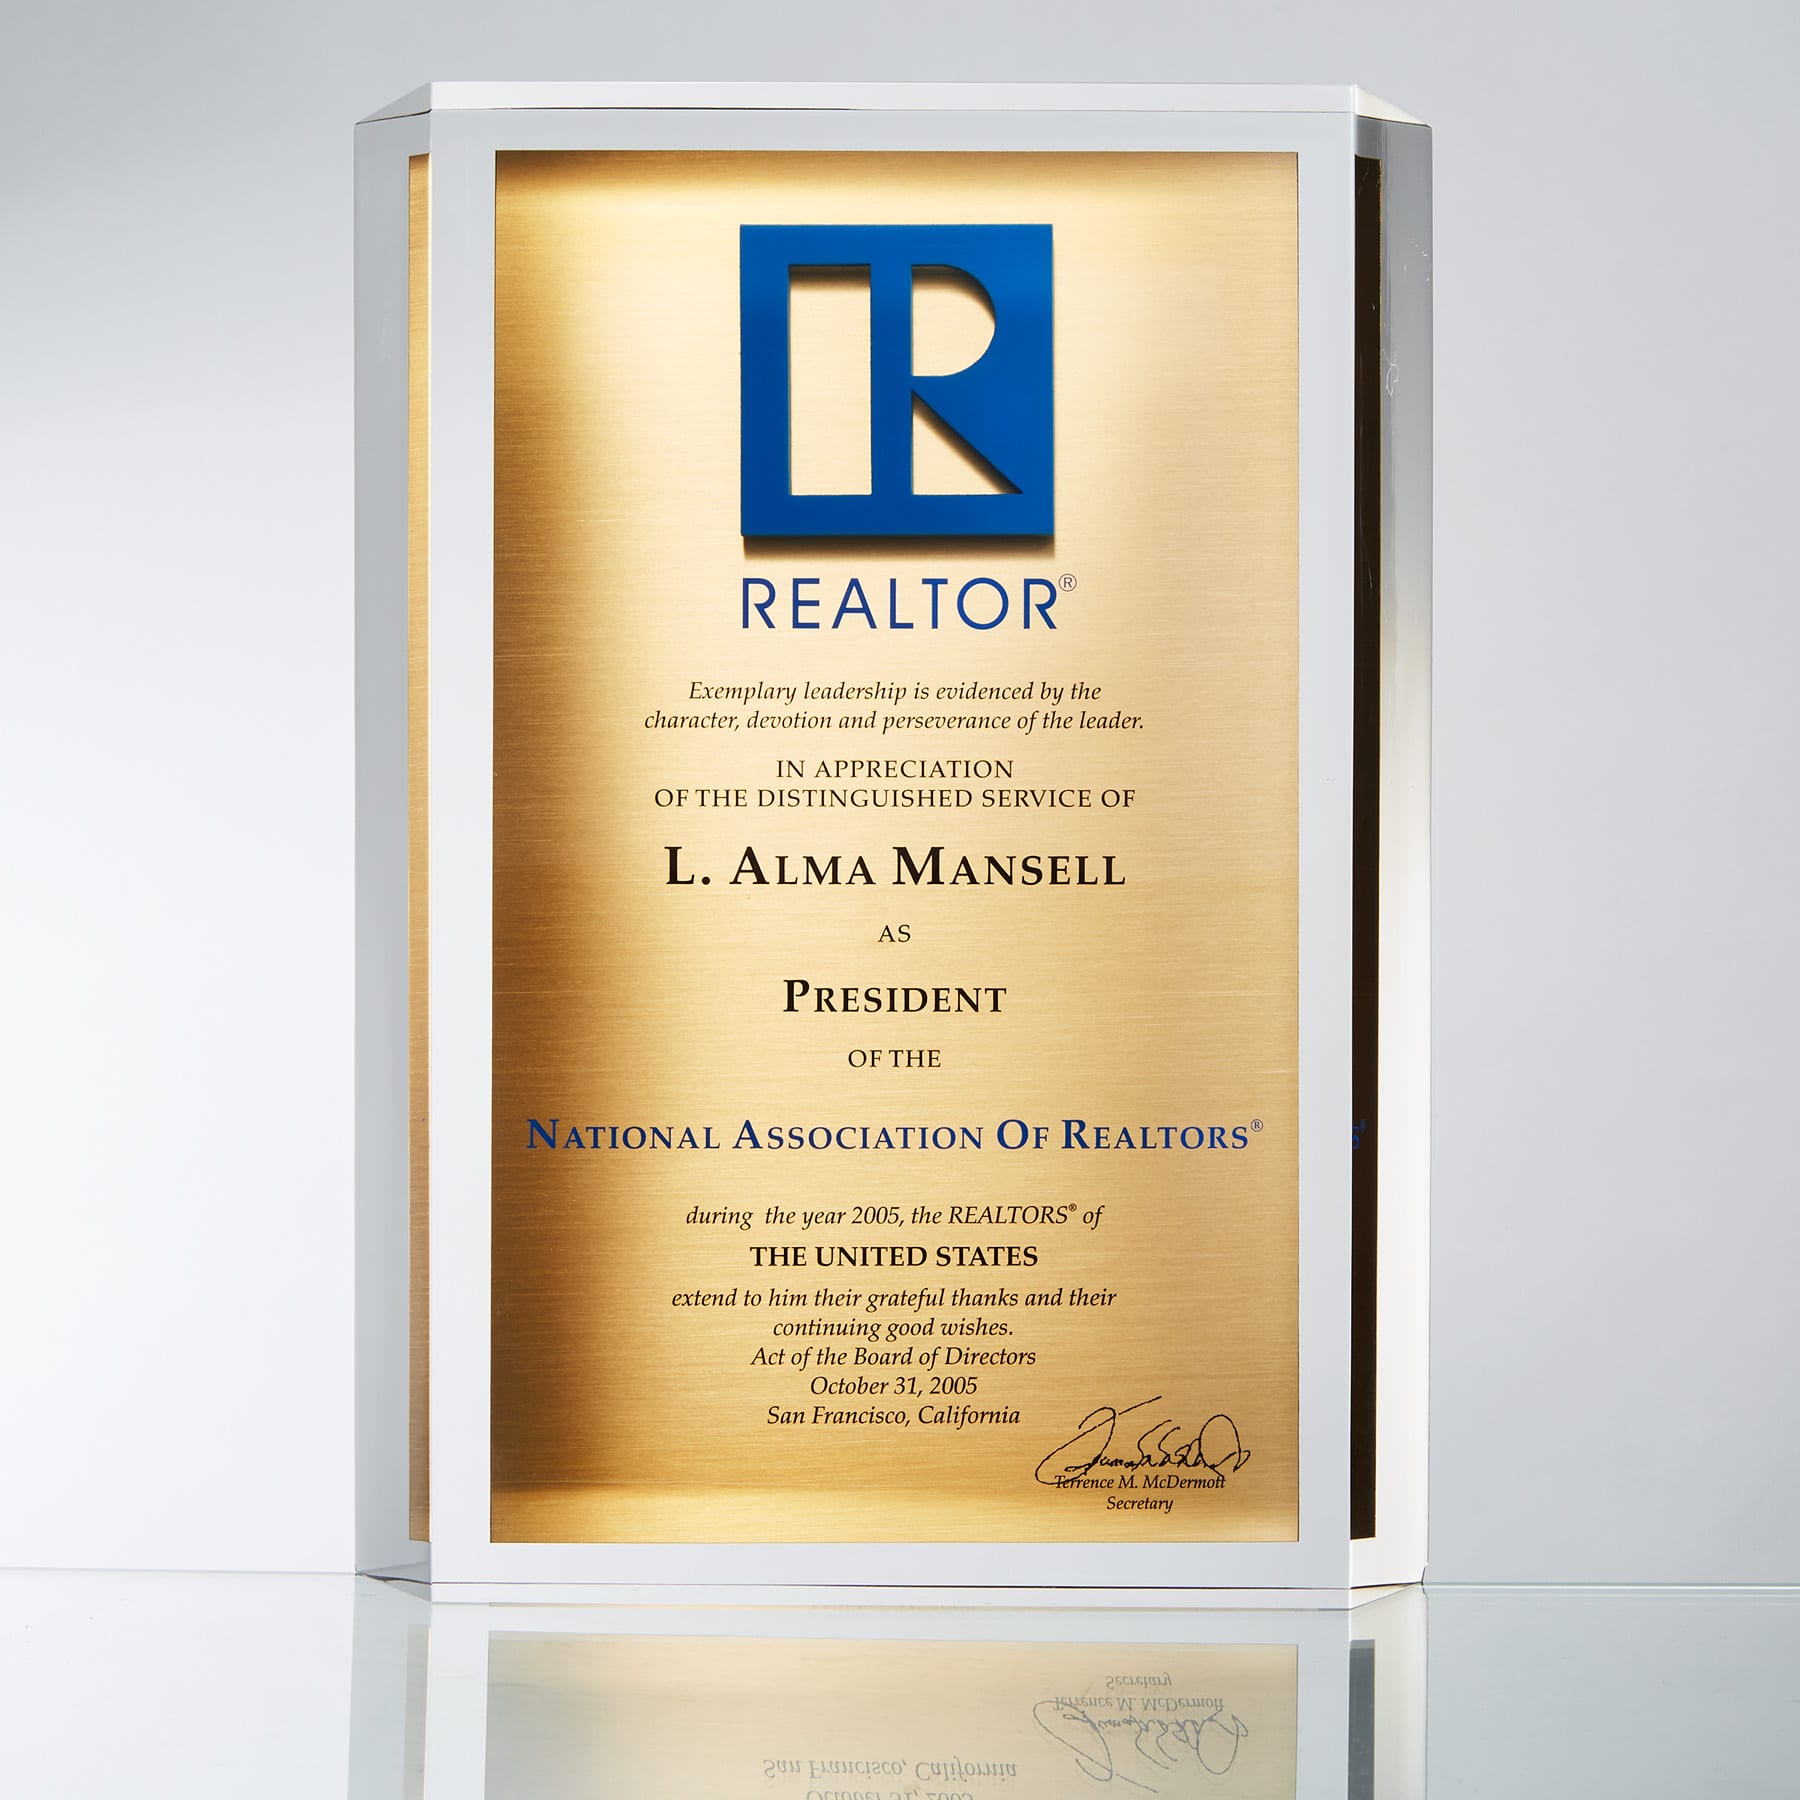 National Association of Realtors Award of Excellence